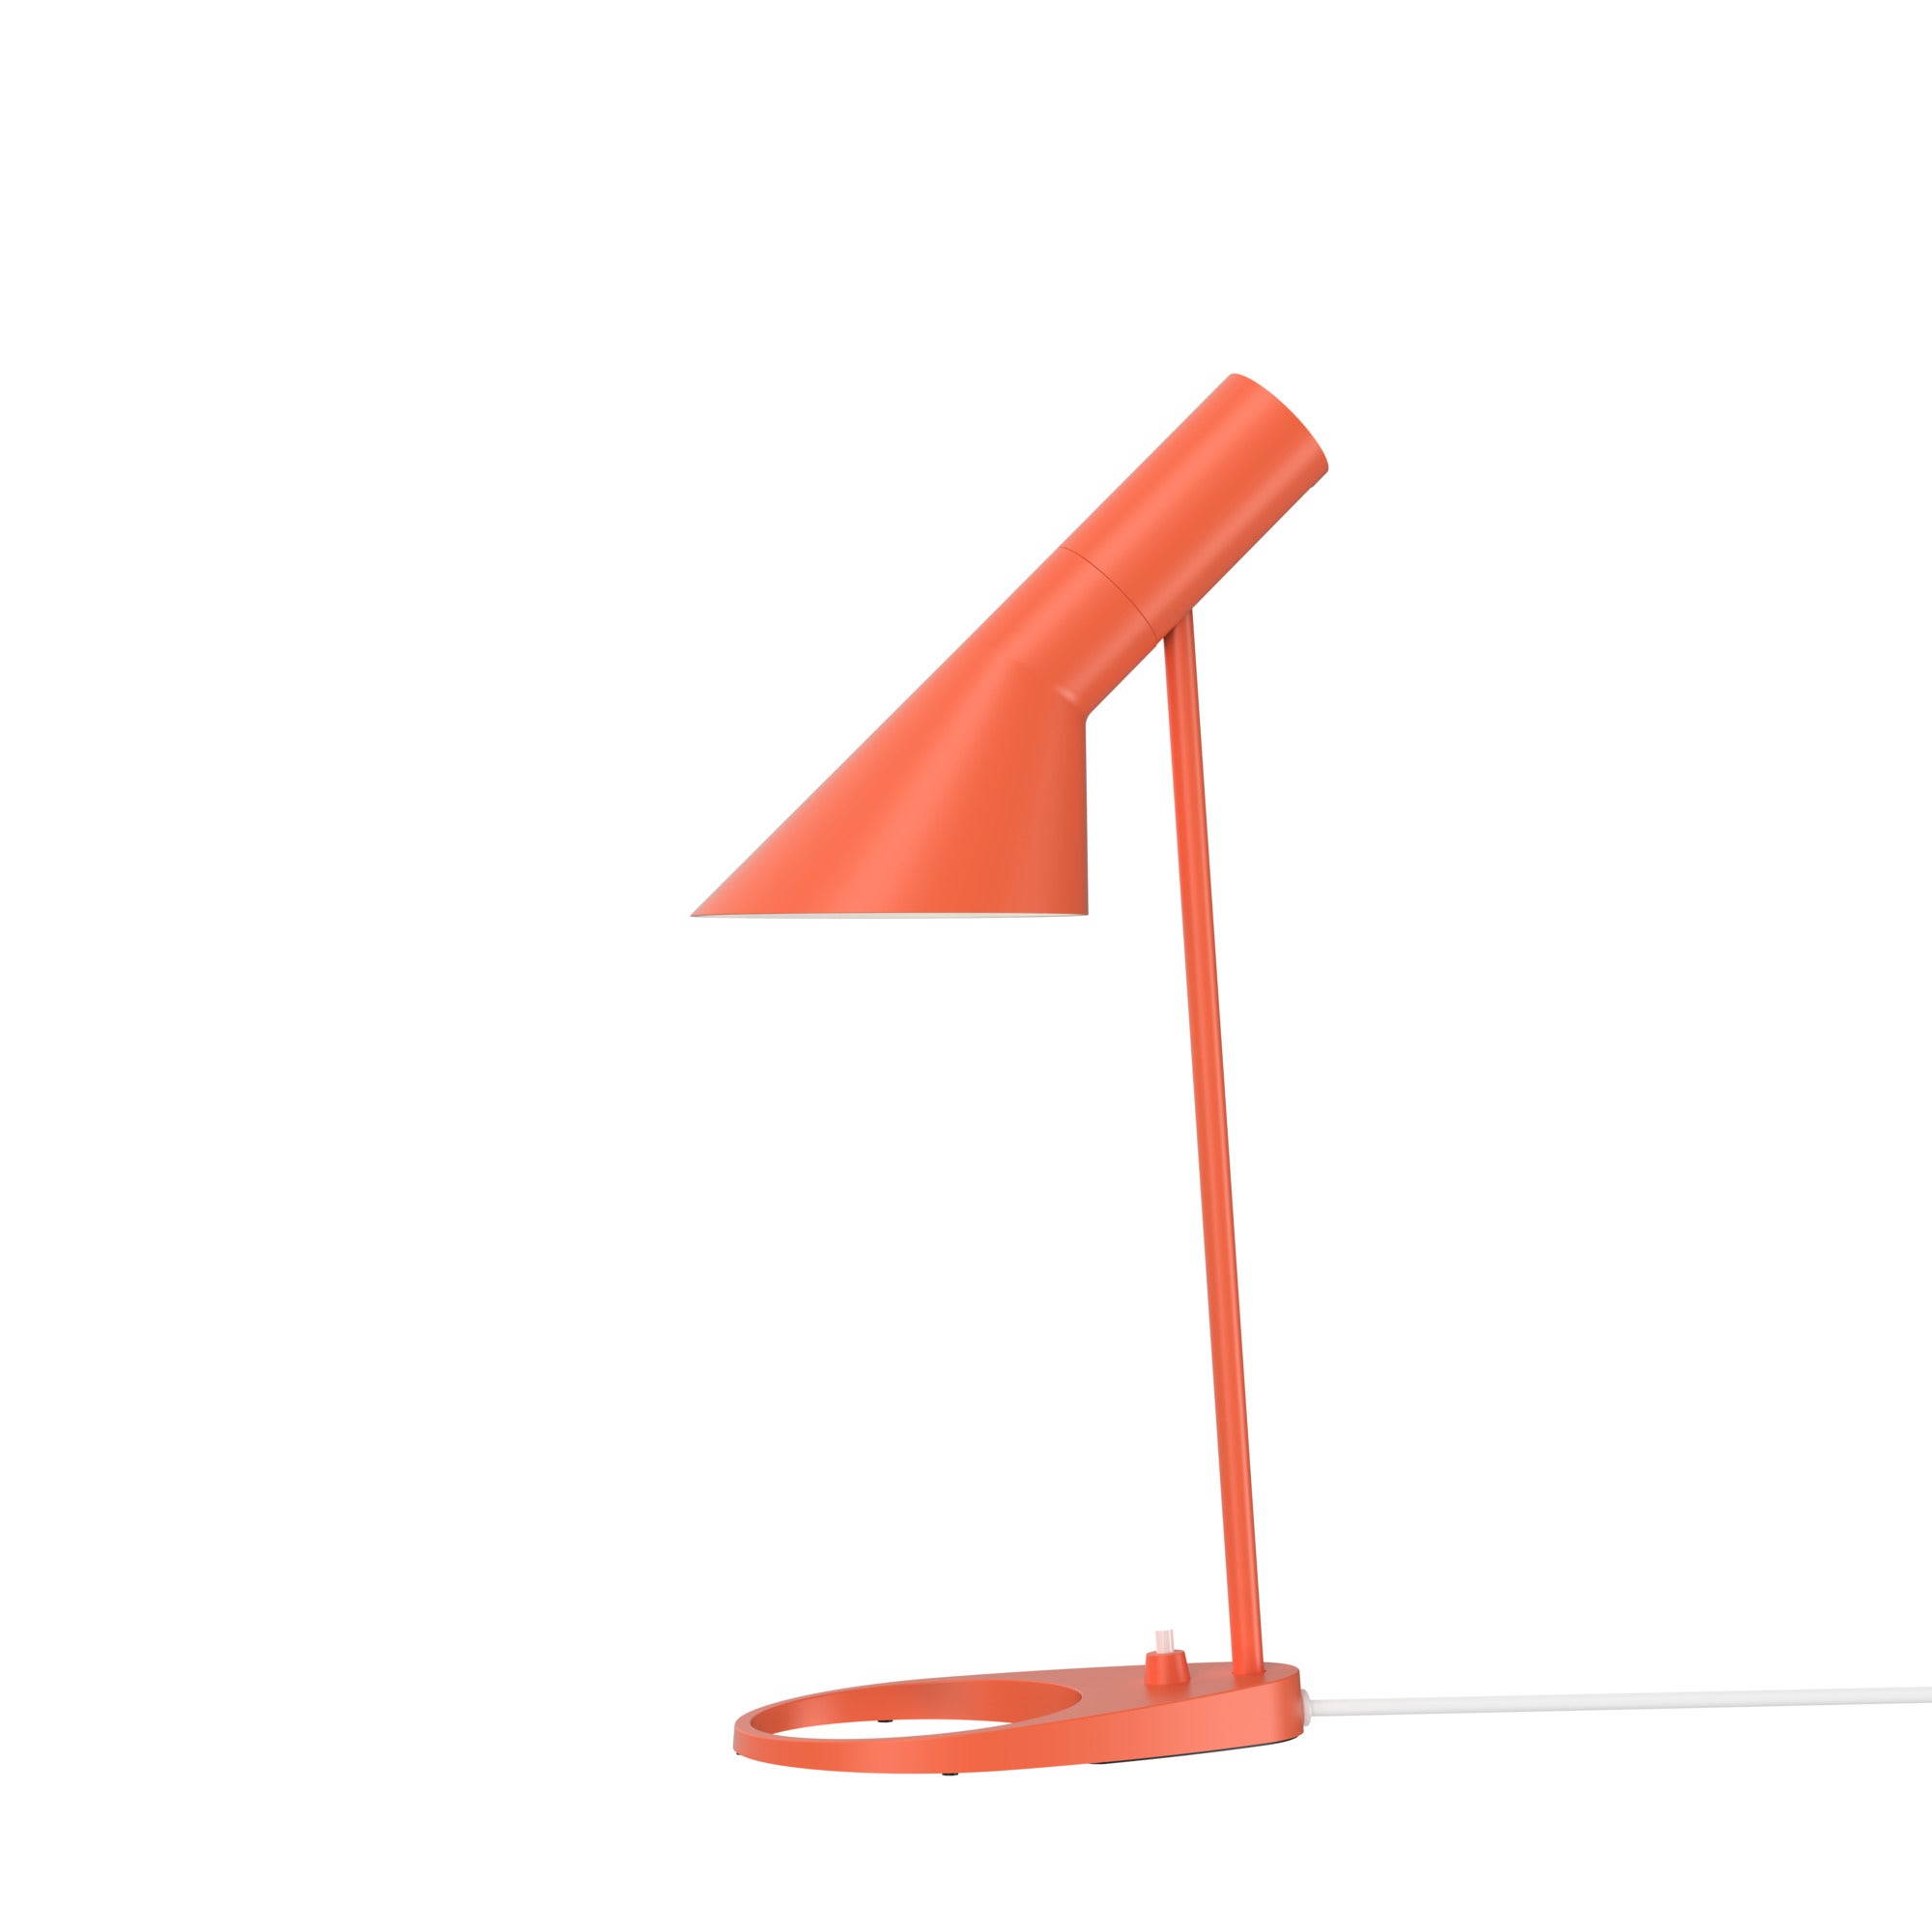 Arne Jacobsen 'Aj Mini' Table Lamp in Electric Orange for Louis Poulsen For Sale